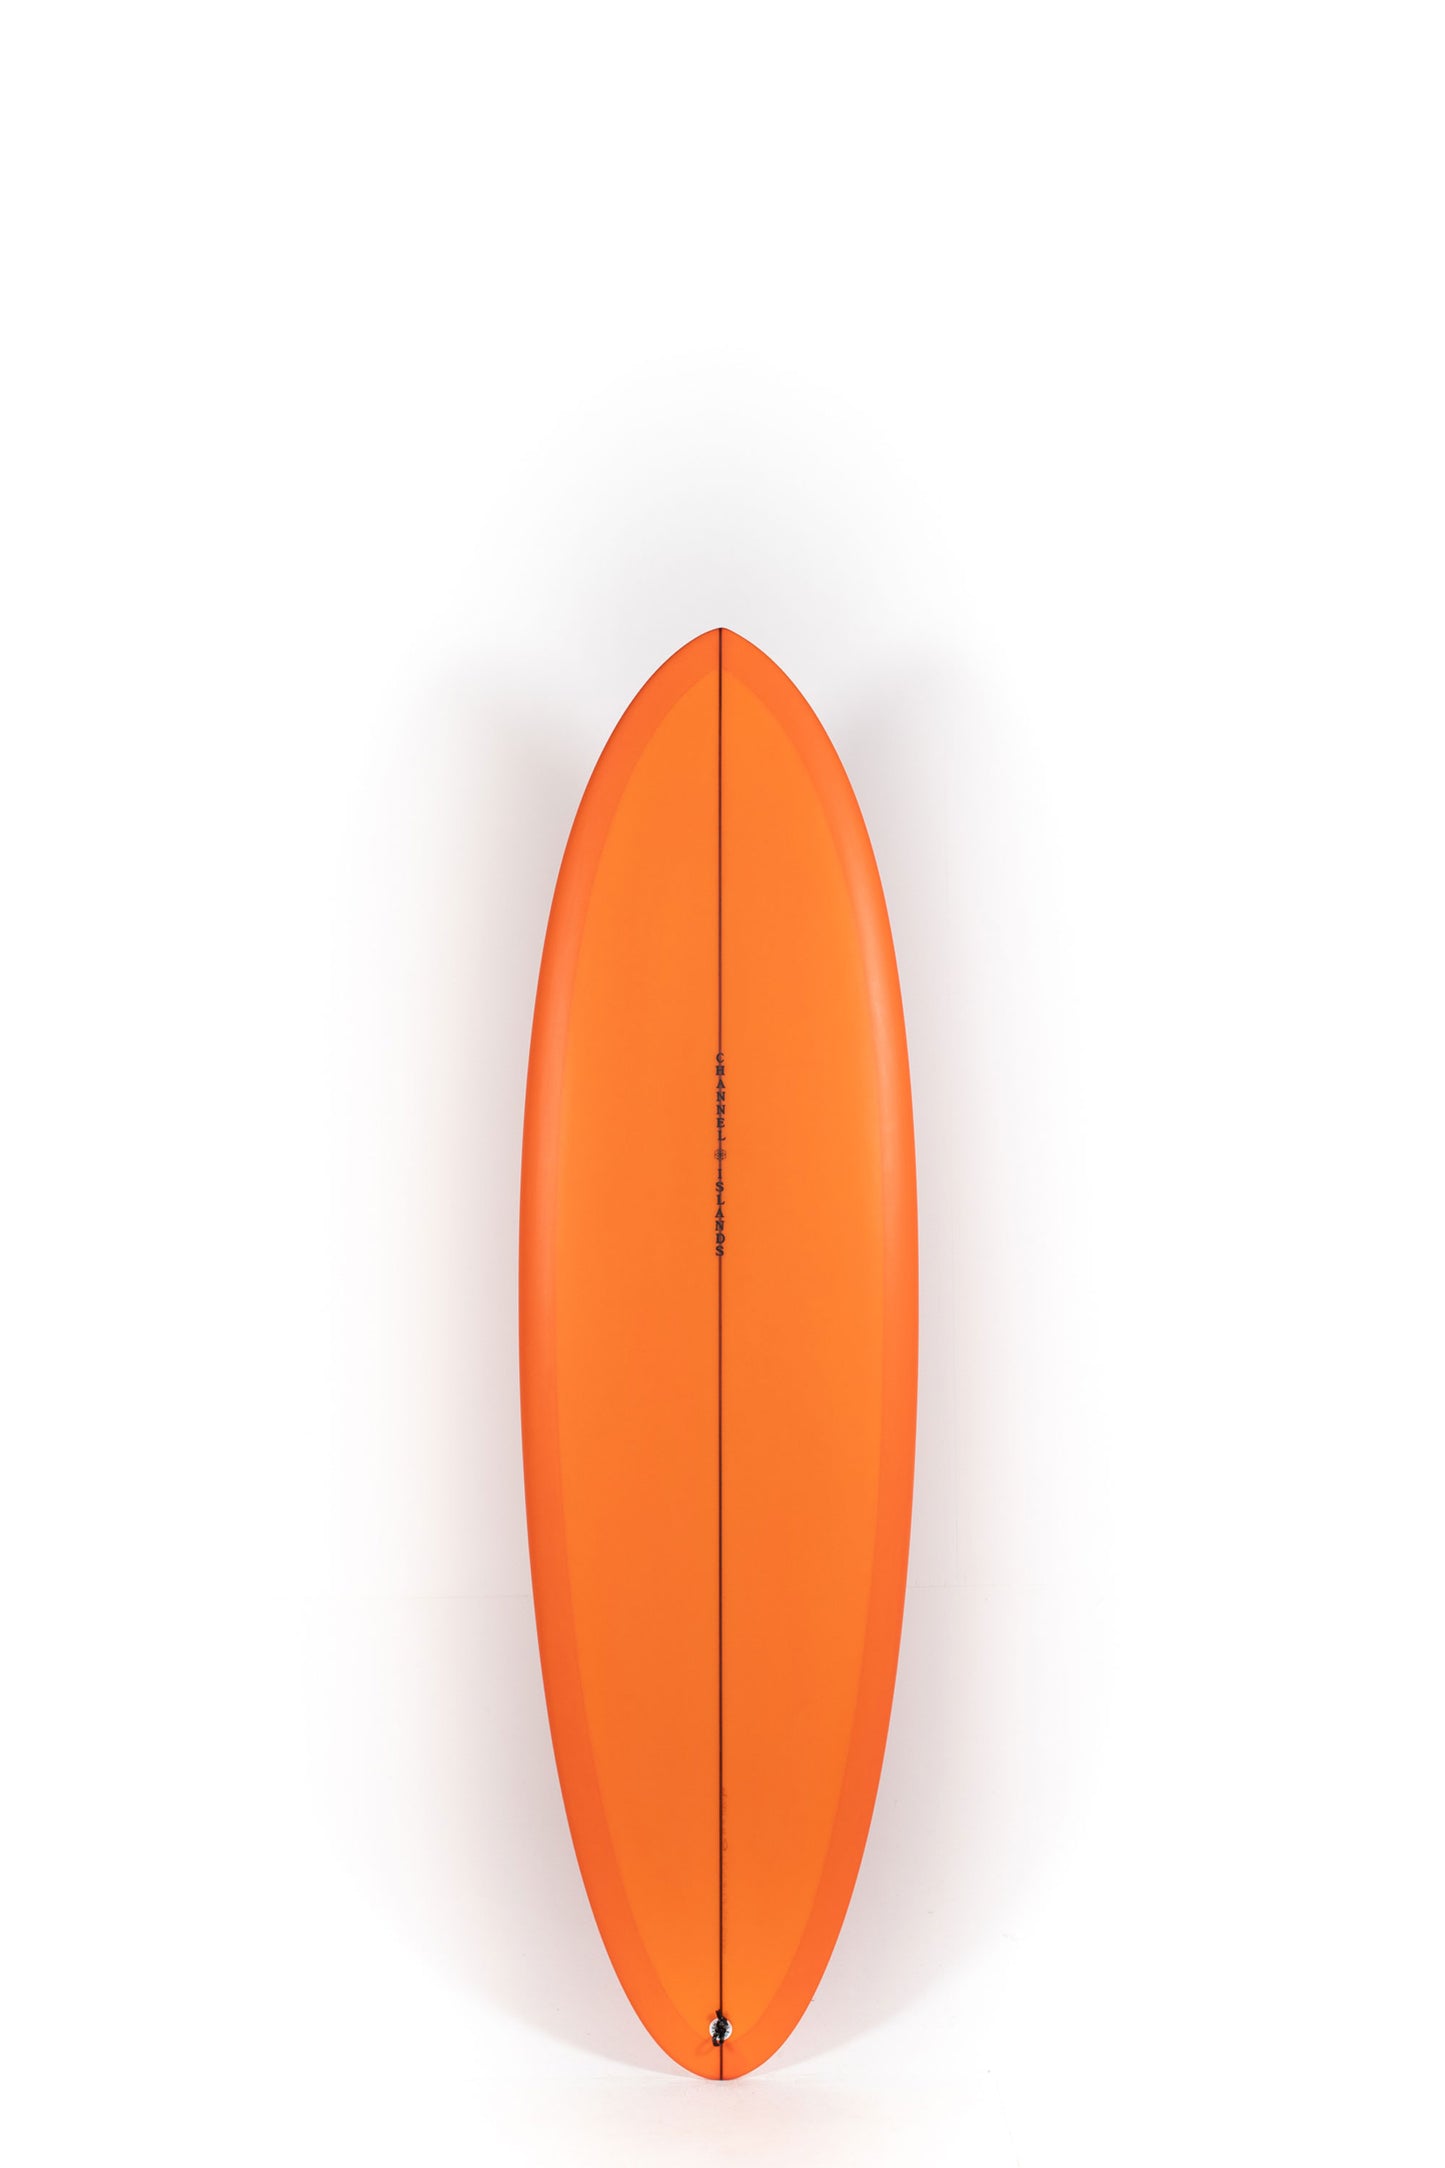 Pukas Surf Shop - Channel Islands - CI MID TWIN - 6'3" x 20 3/4 x 2 5/8 - 37,5L - CI26873